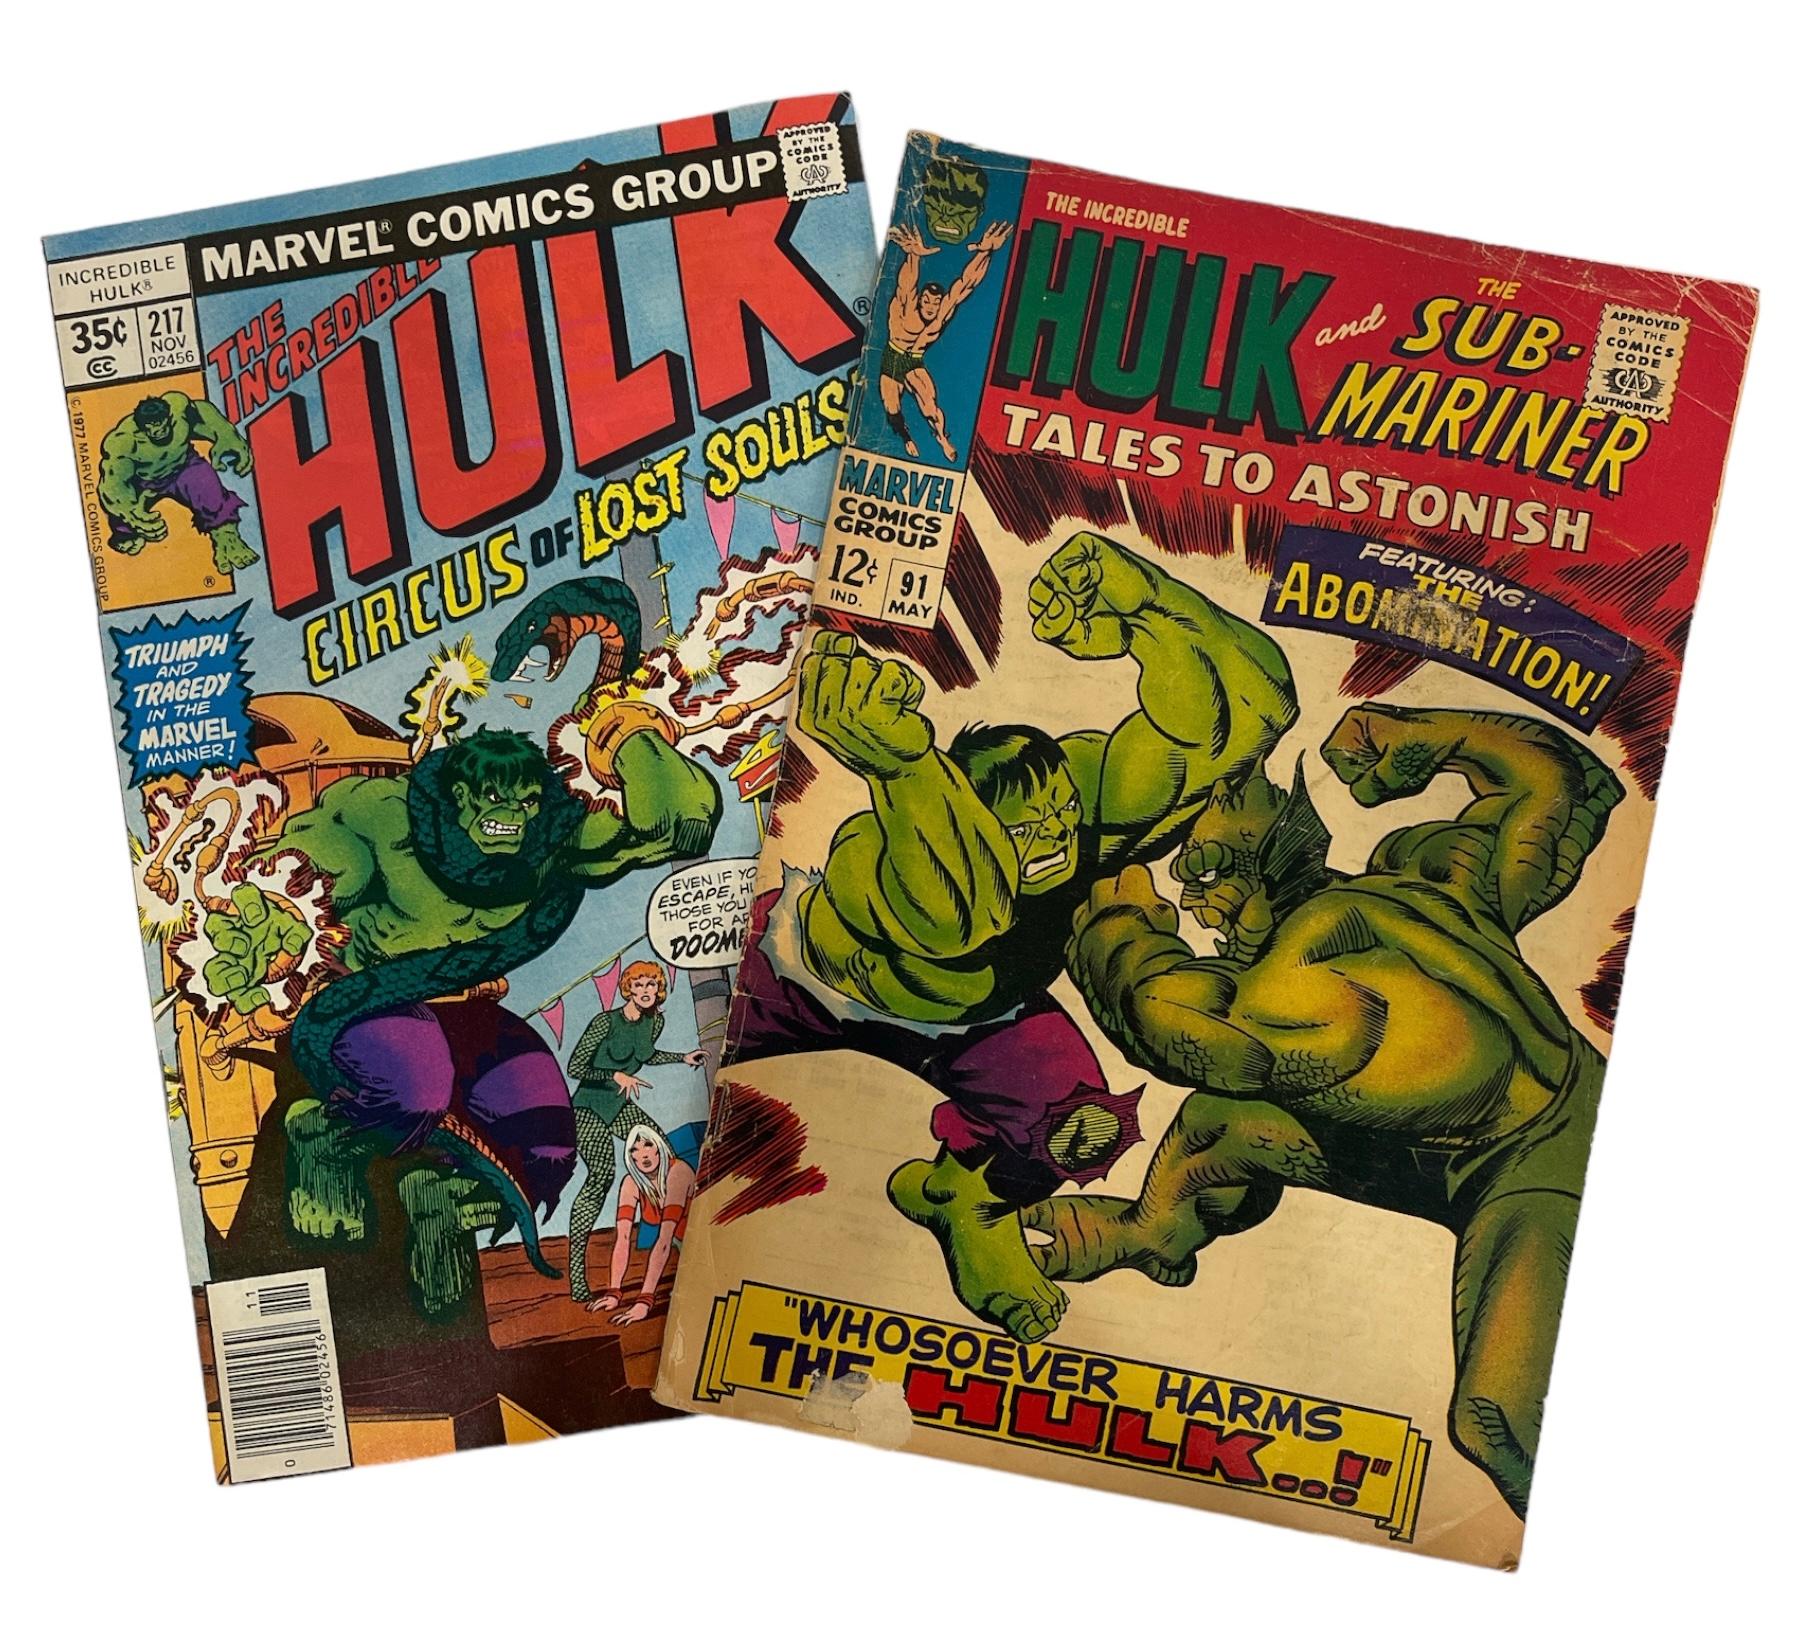 Vintage Marvel Comics - The Incredible Hulk Series No.91 and No.217